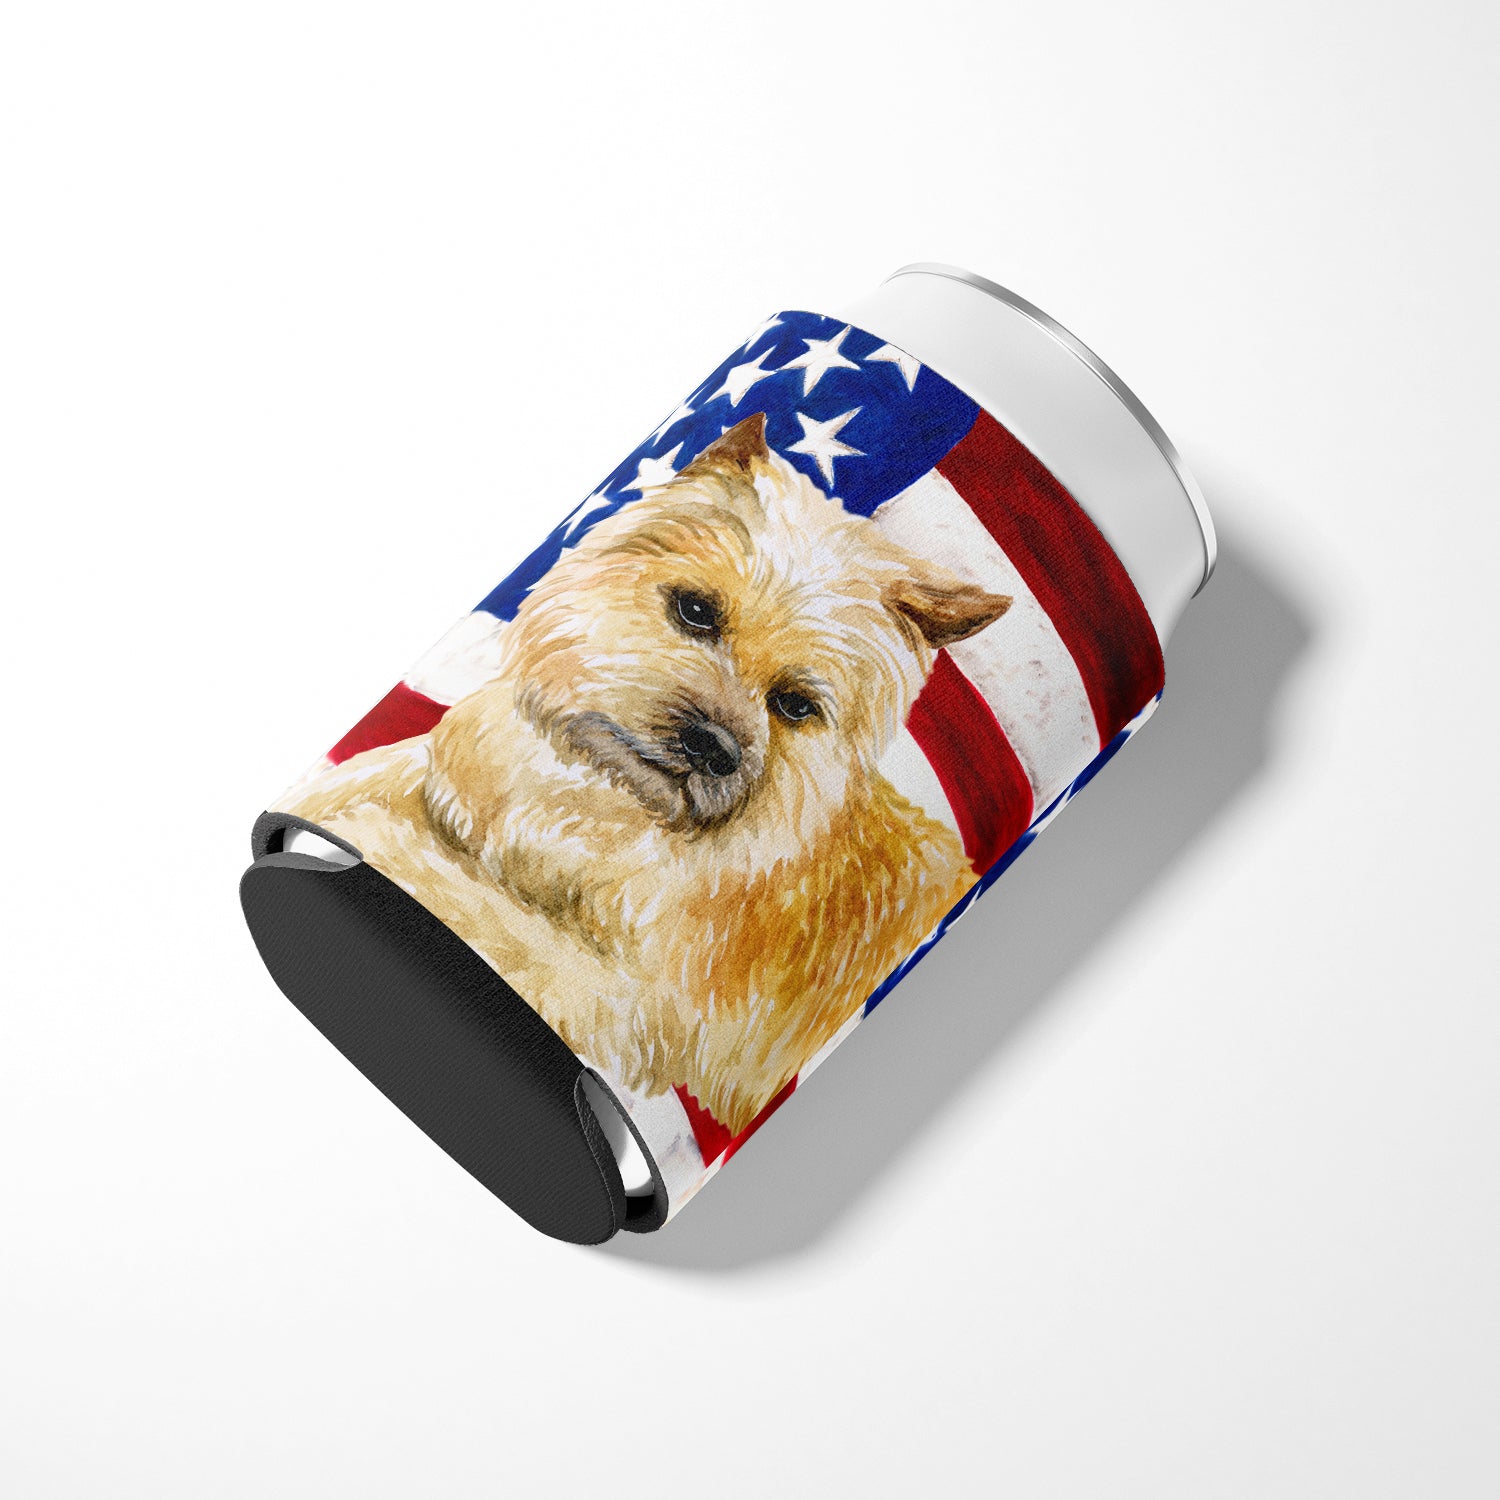 Cairn Terrier Patriotic Can or Bottle Hugger BB9690CC